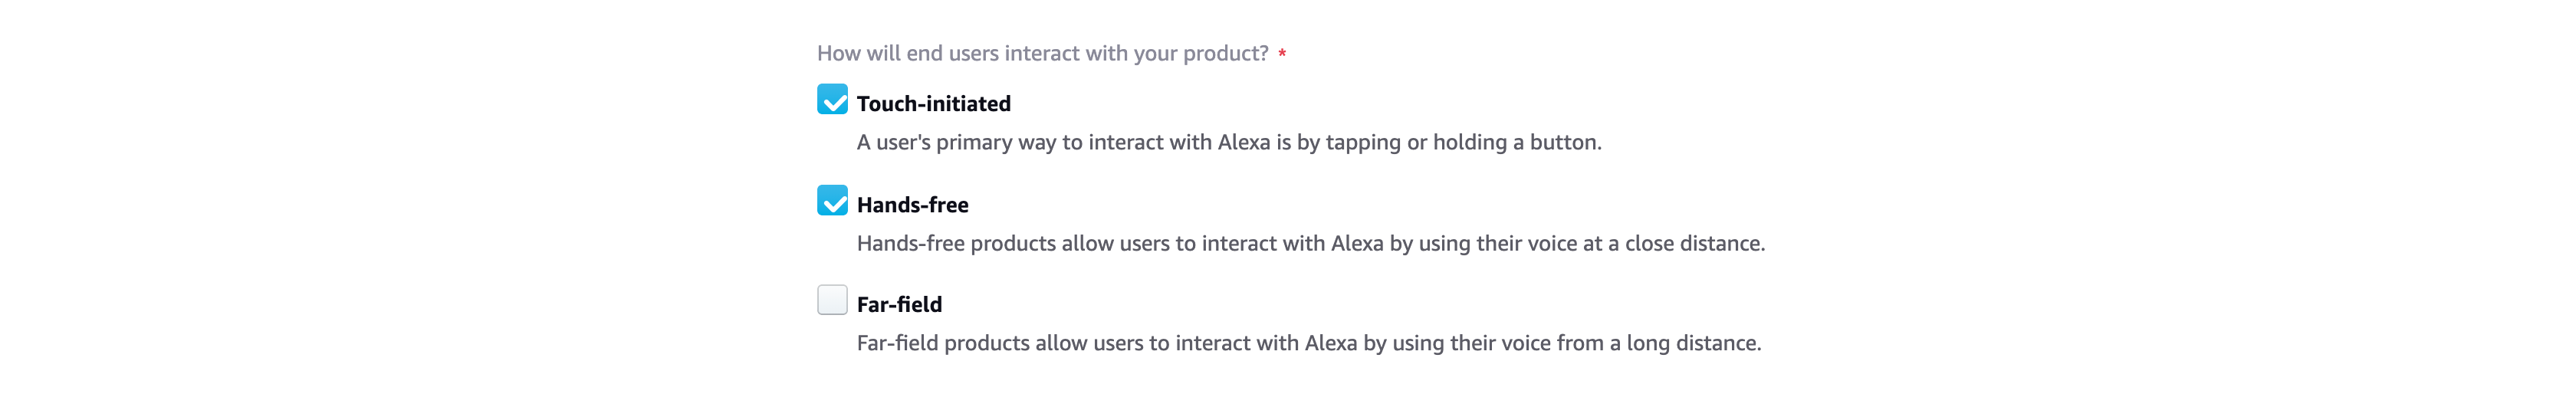 Alexa Product Interact